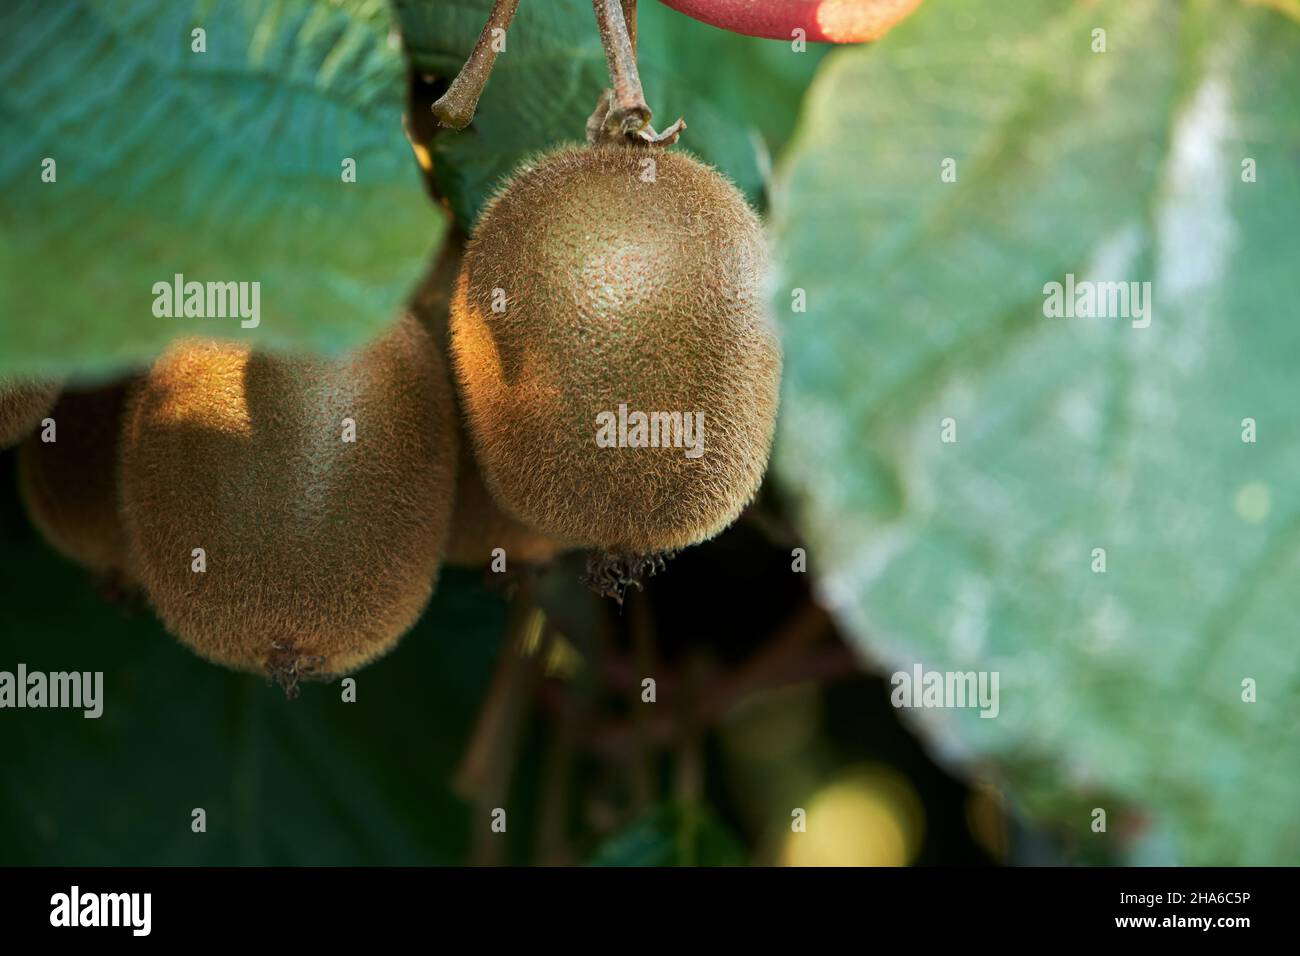 Kiwifruits growing in Actinidia deliciosa woody vine, selective focus Stock Photo